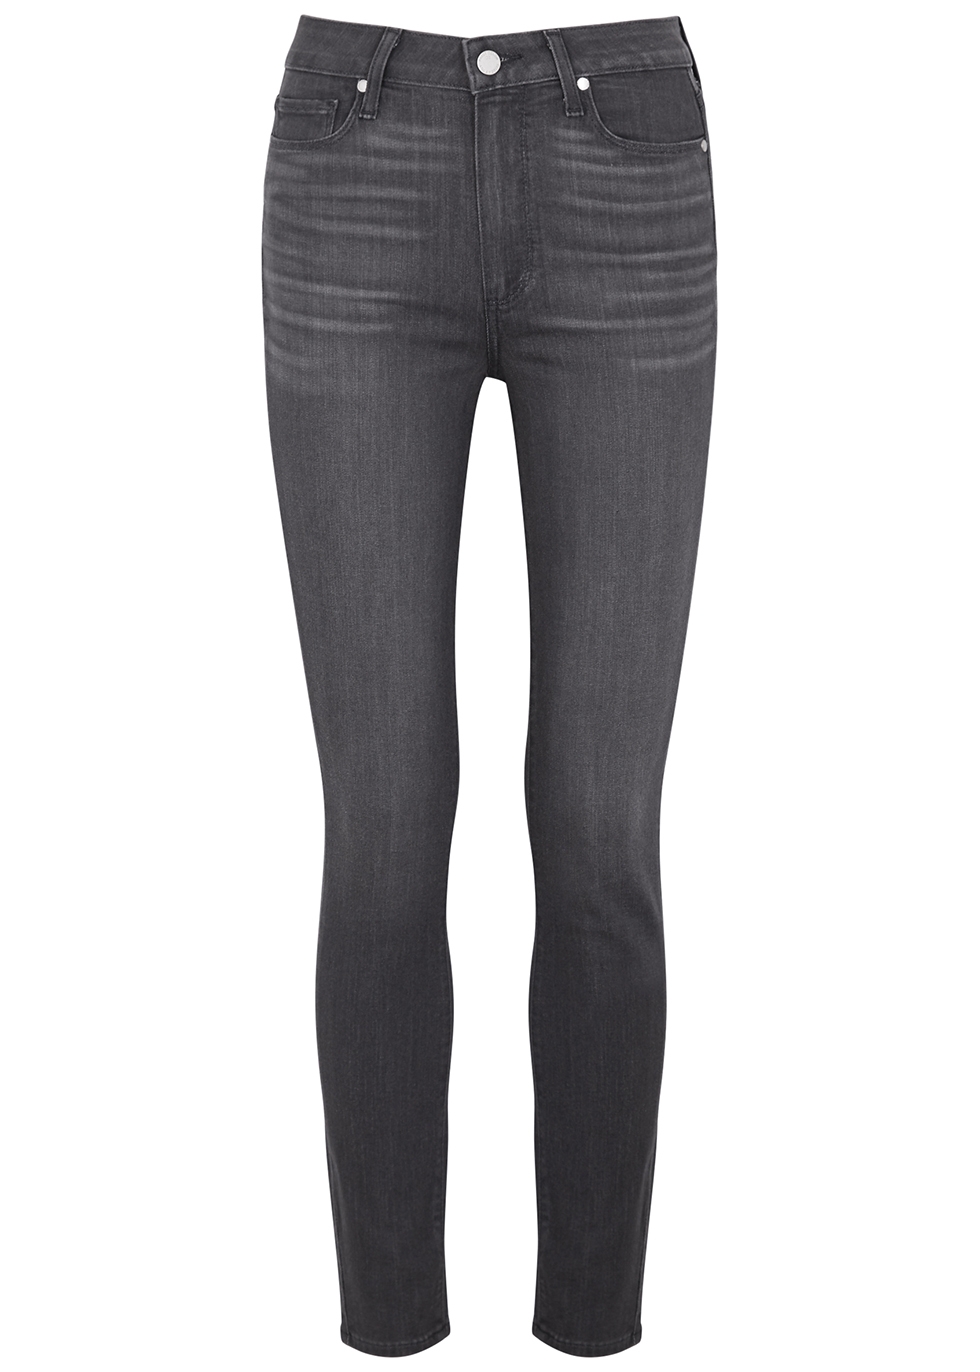 Paige Hoxton Ankle grey skinny jeans - Harvey Nichols